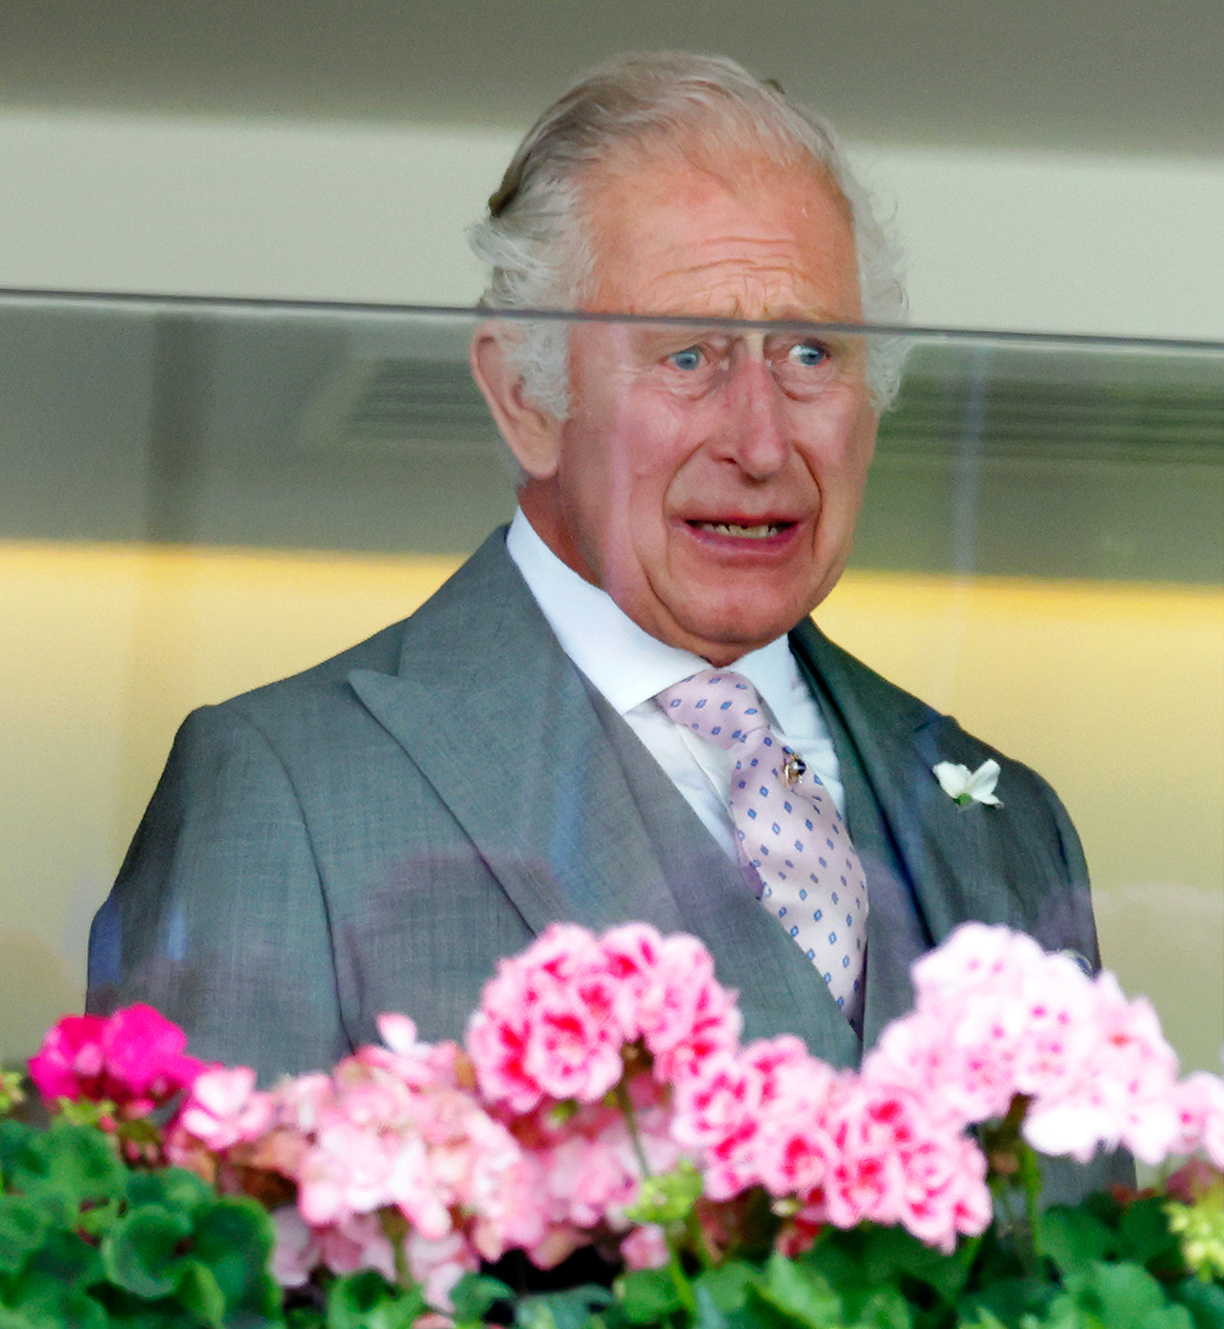 Le roi Charles III au Royal Ascot le 22 juin 2023 | Source : Getty Images